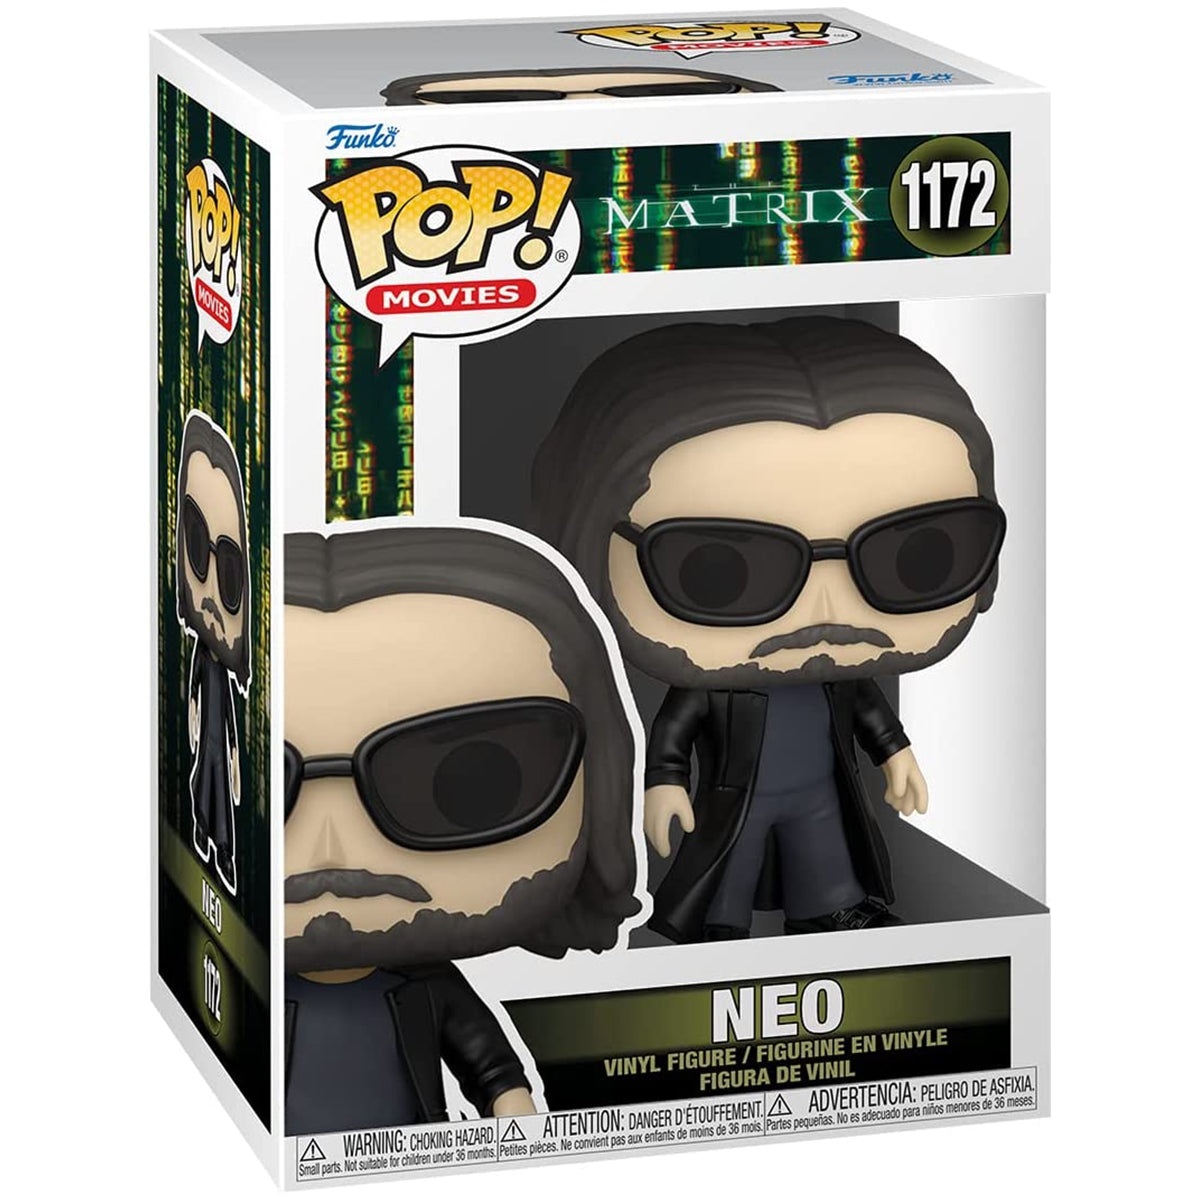 Funko POP! Matrix: Neo